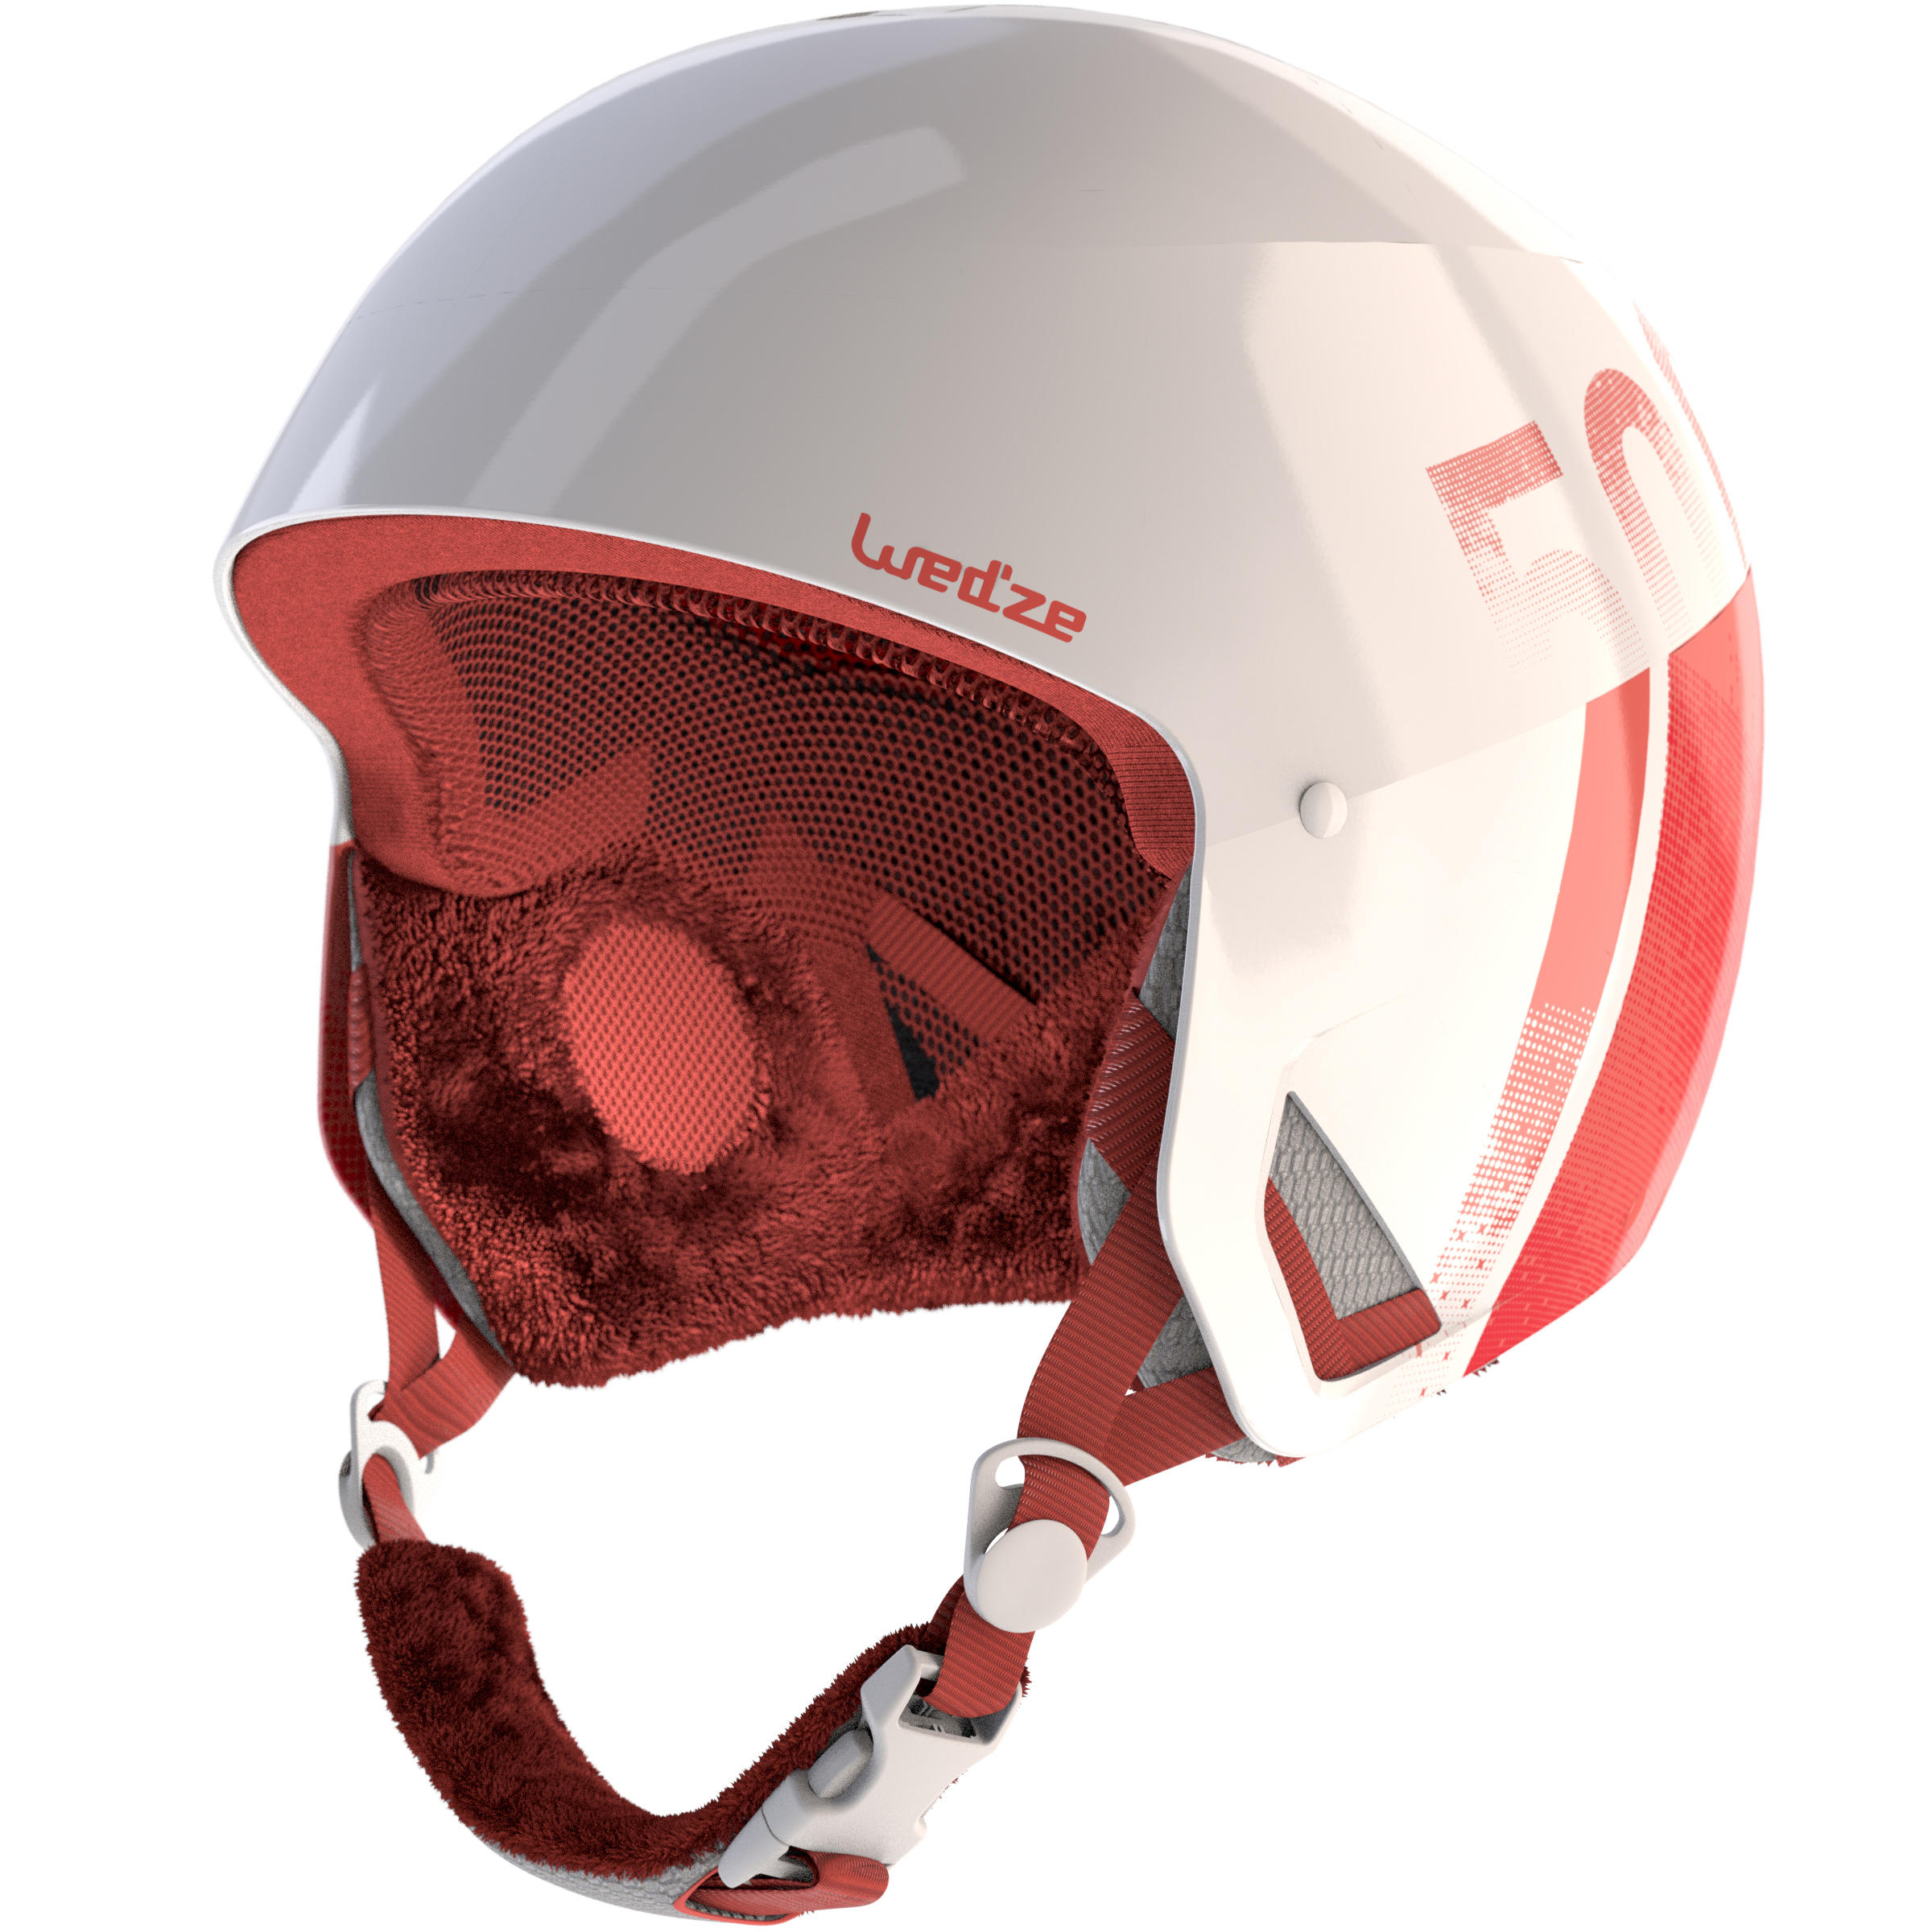 helmets in decathlon